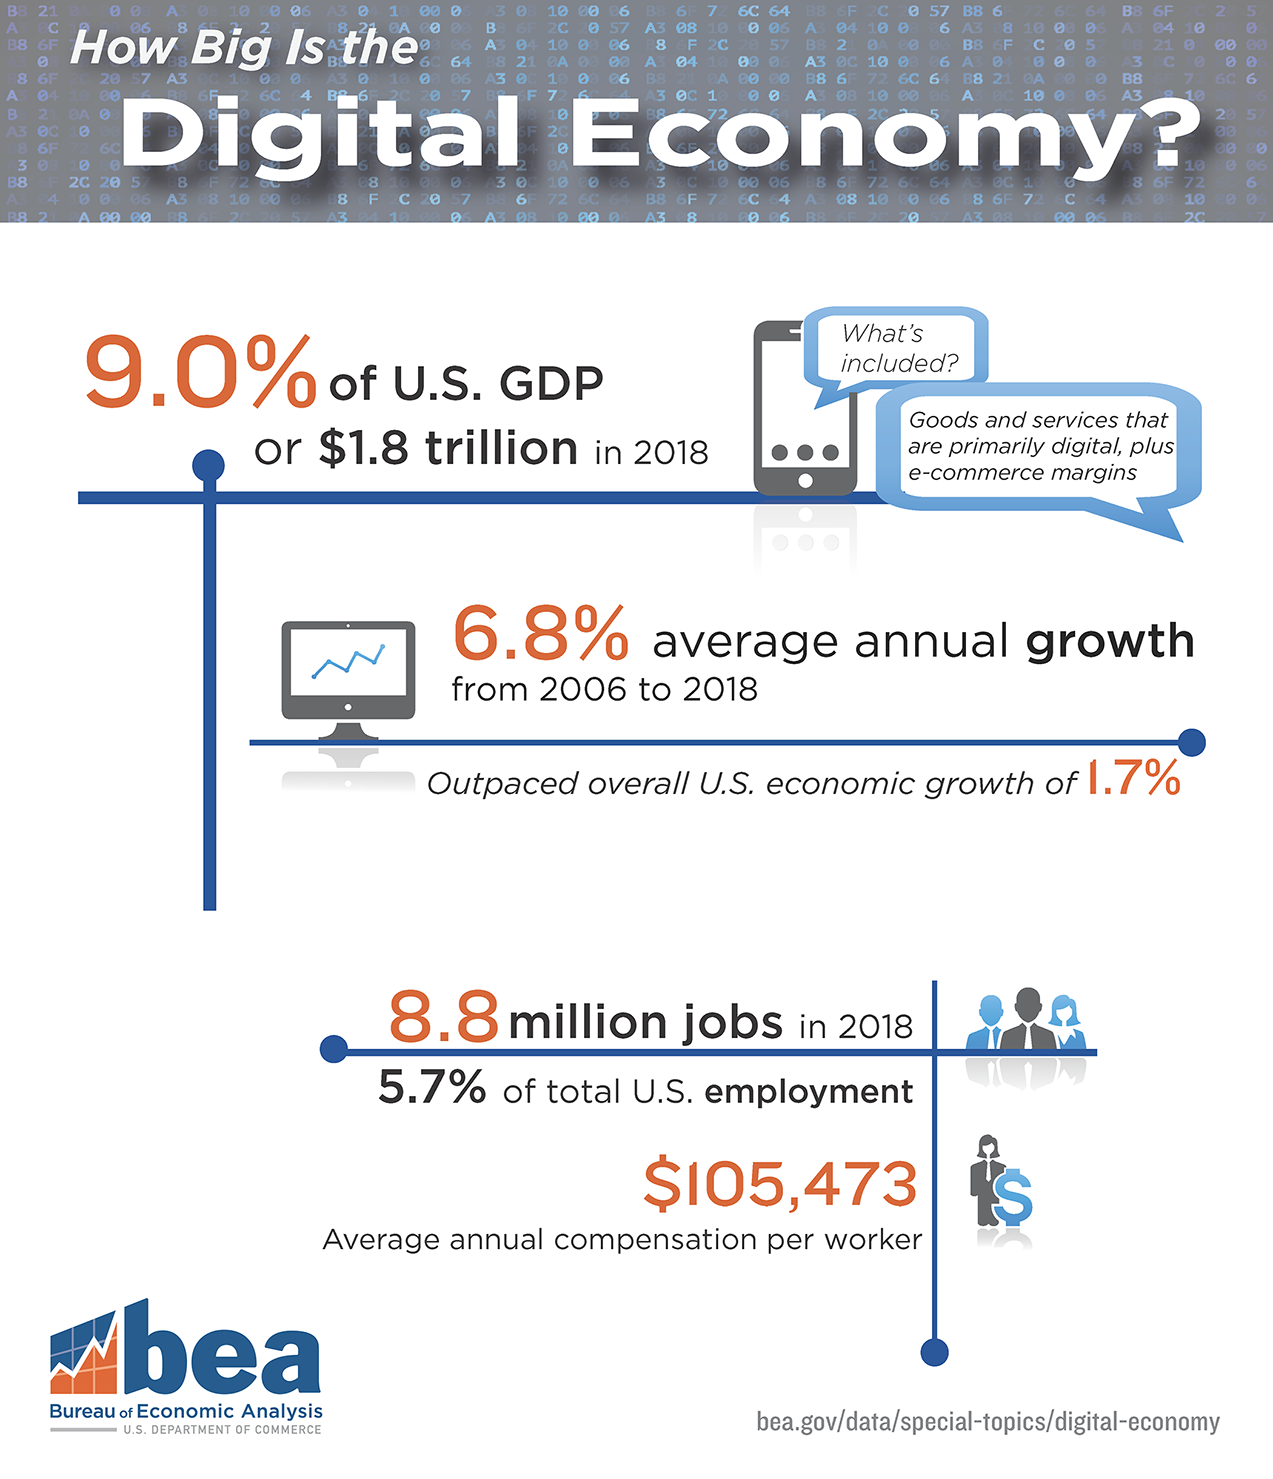 How Big is the Digital Economy? 2018